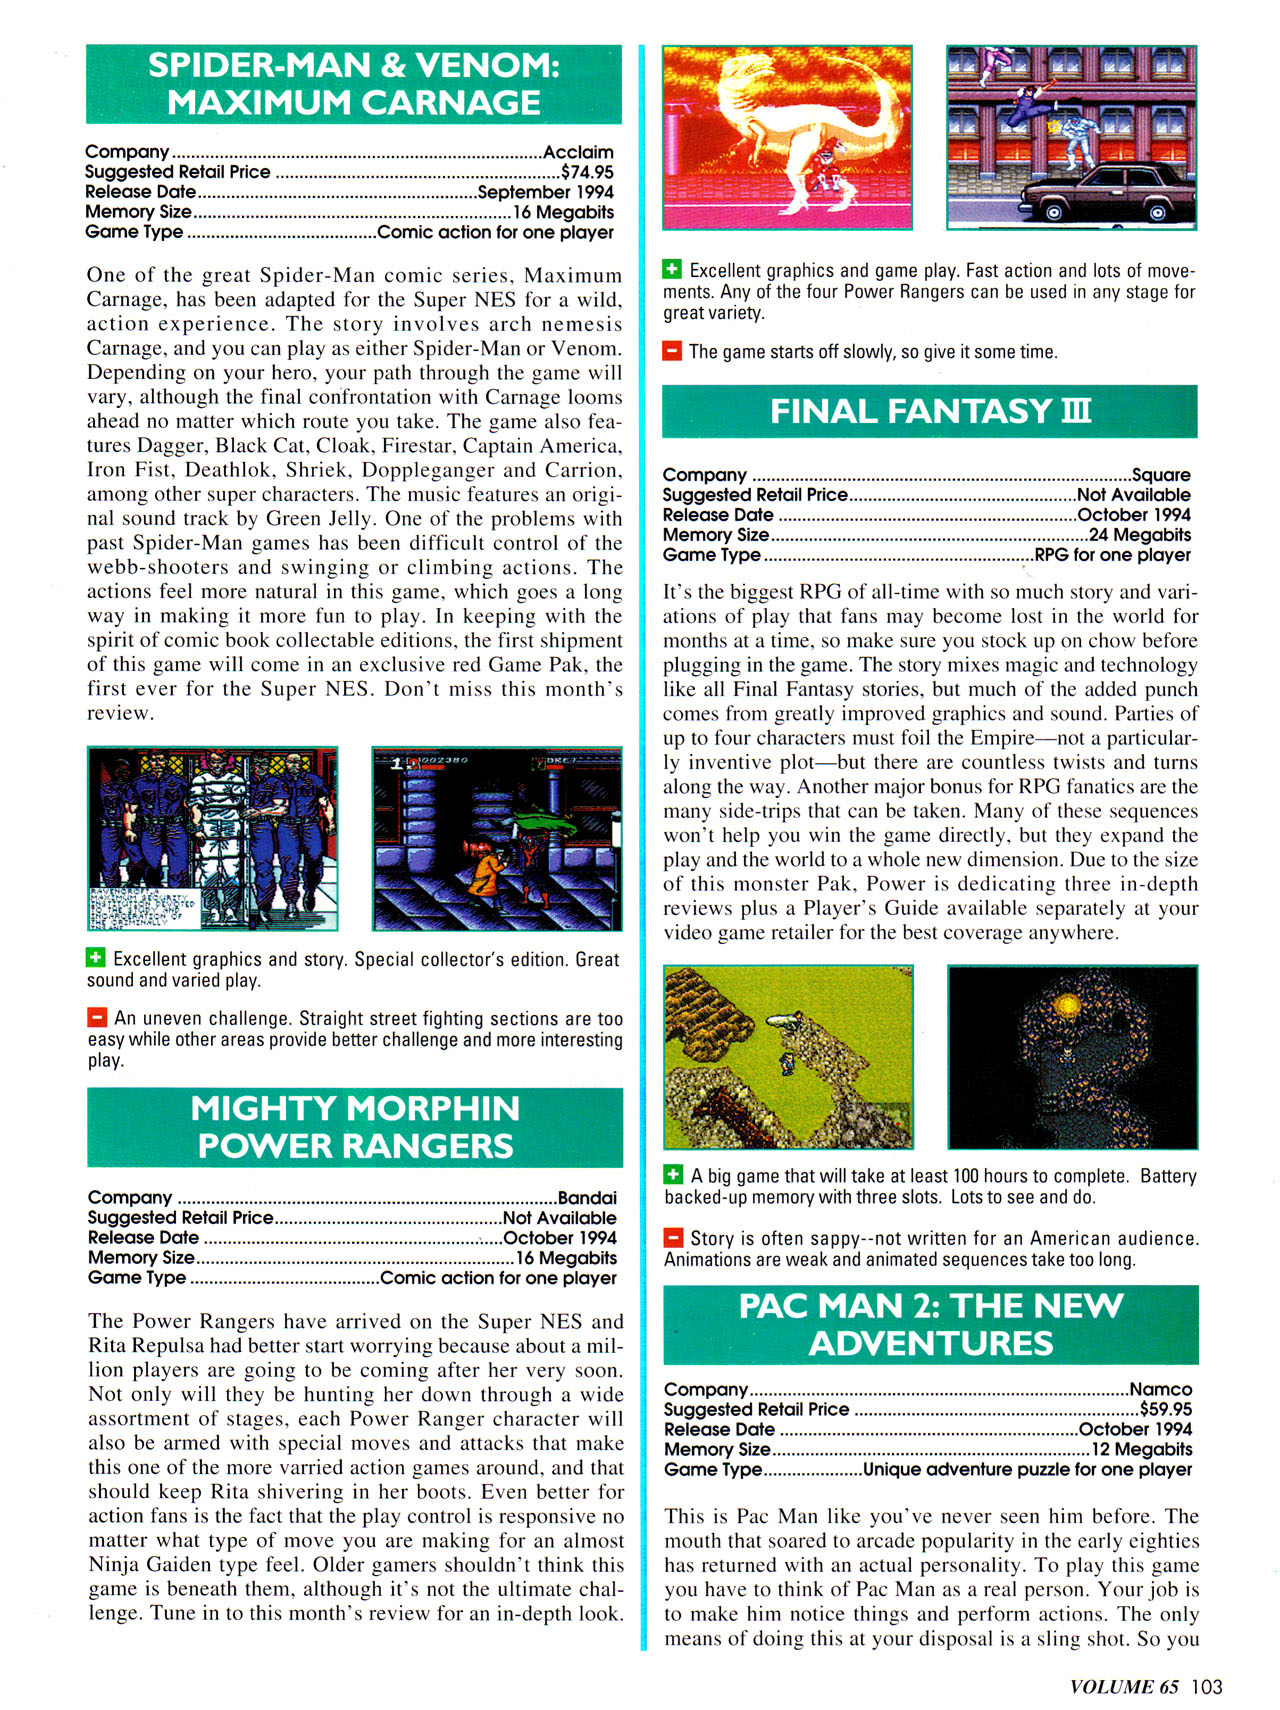 Read online Nintendo Power comic -  Issue #65 - 112